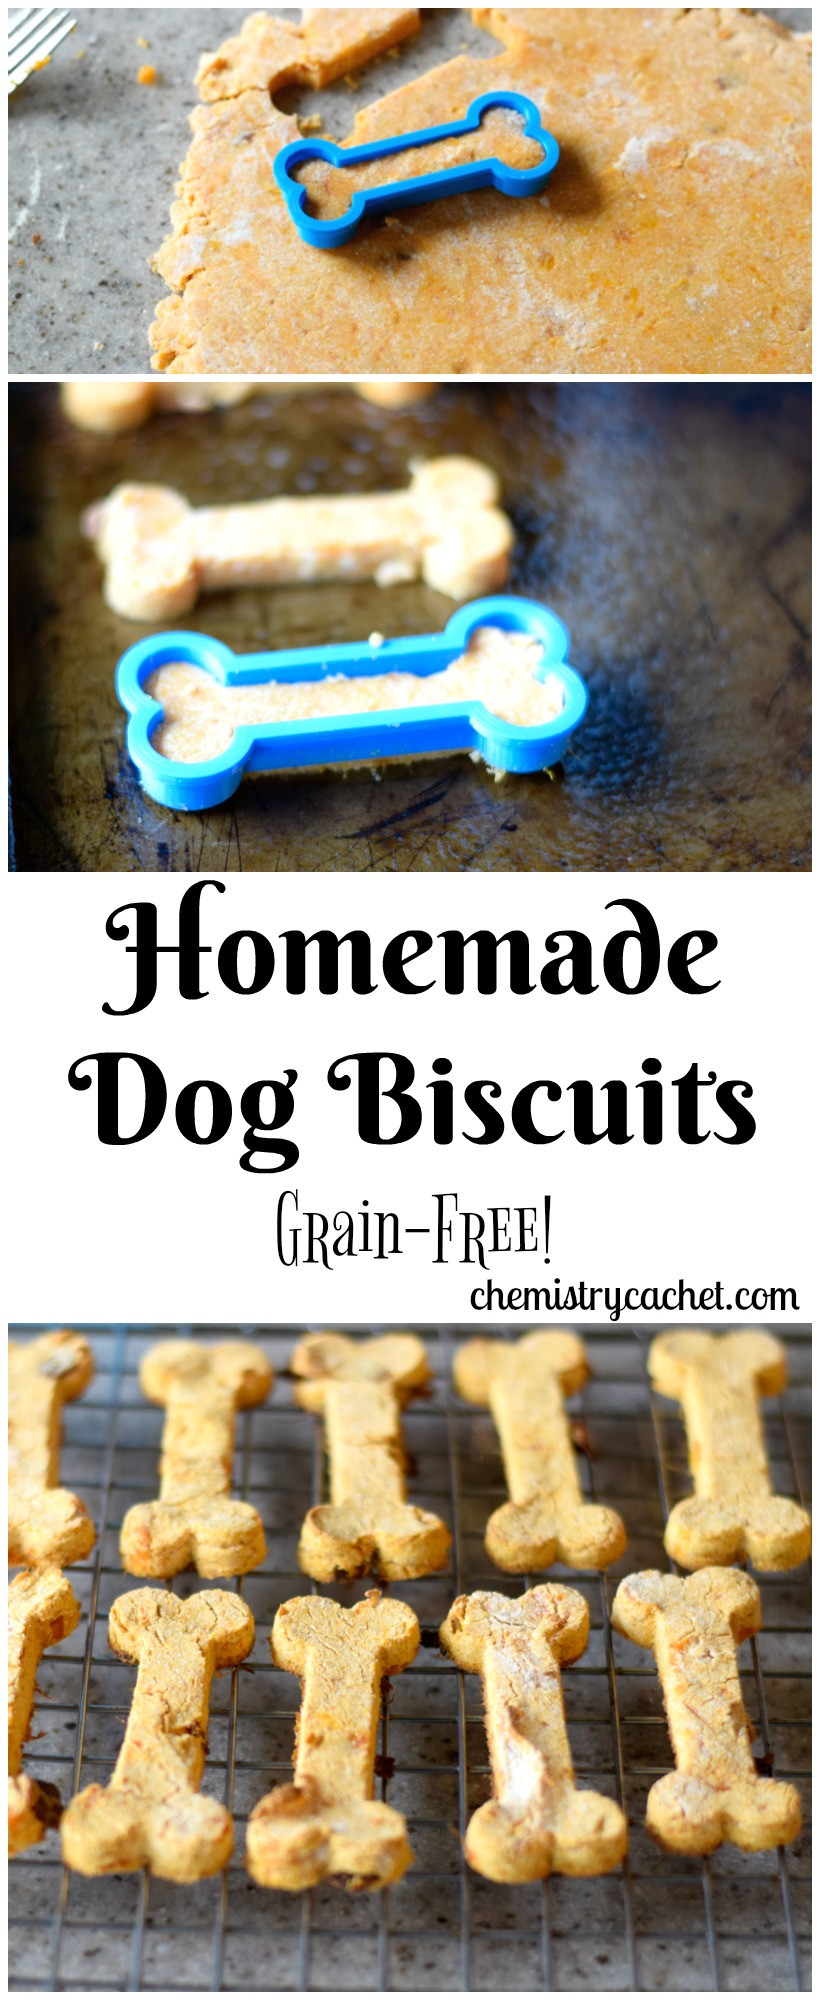 DIY Grain Free Dog Treats
 Easy Homemade Grain free Dog Biscuits great t idea